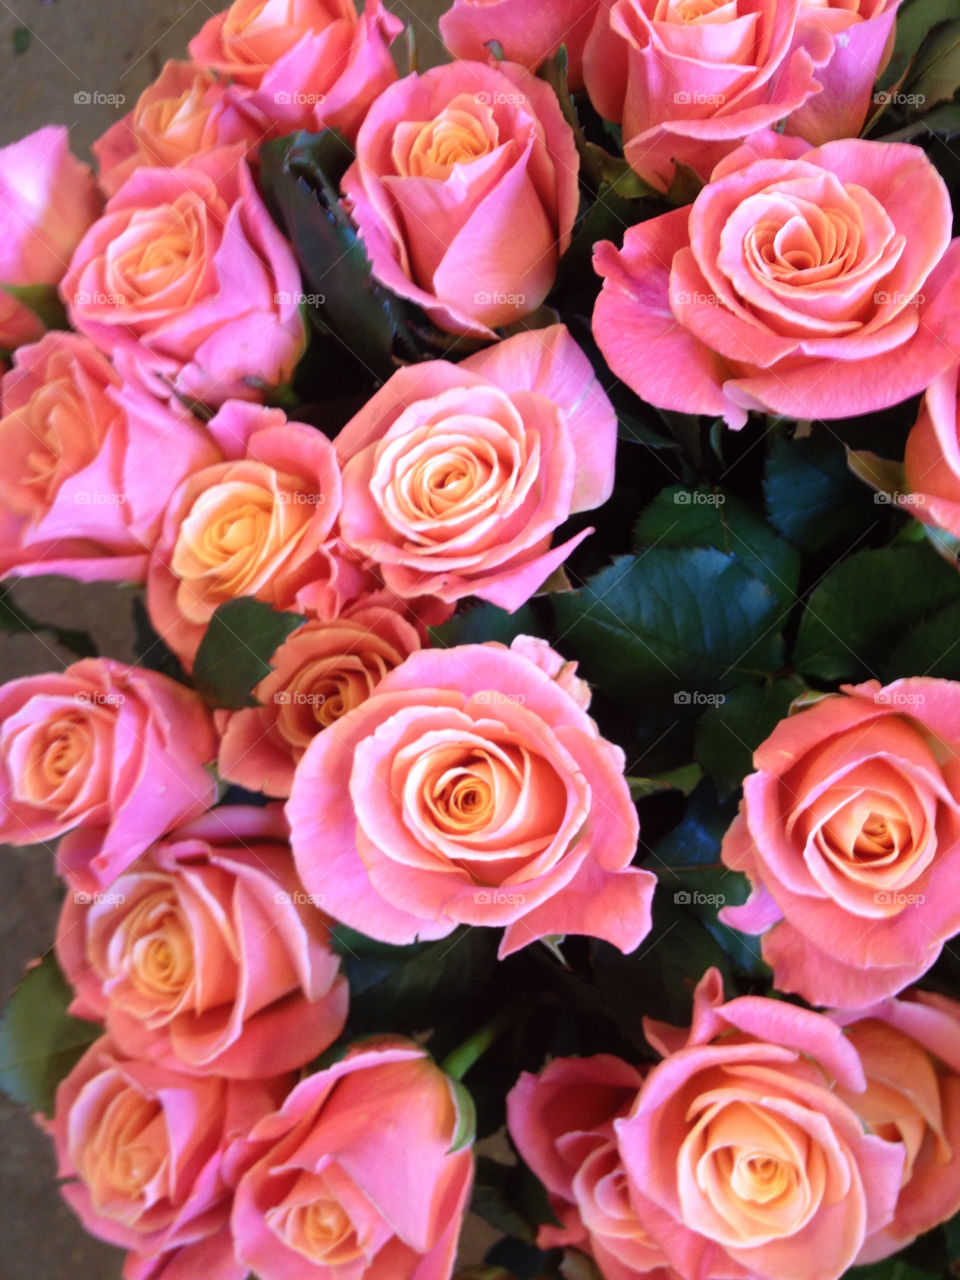 sweden pink roses miss piggy by pebsan